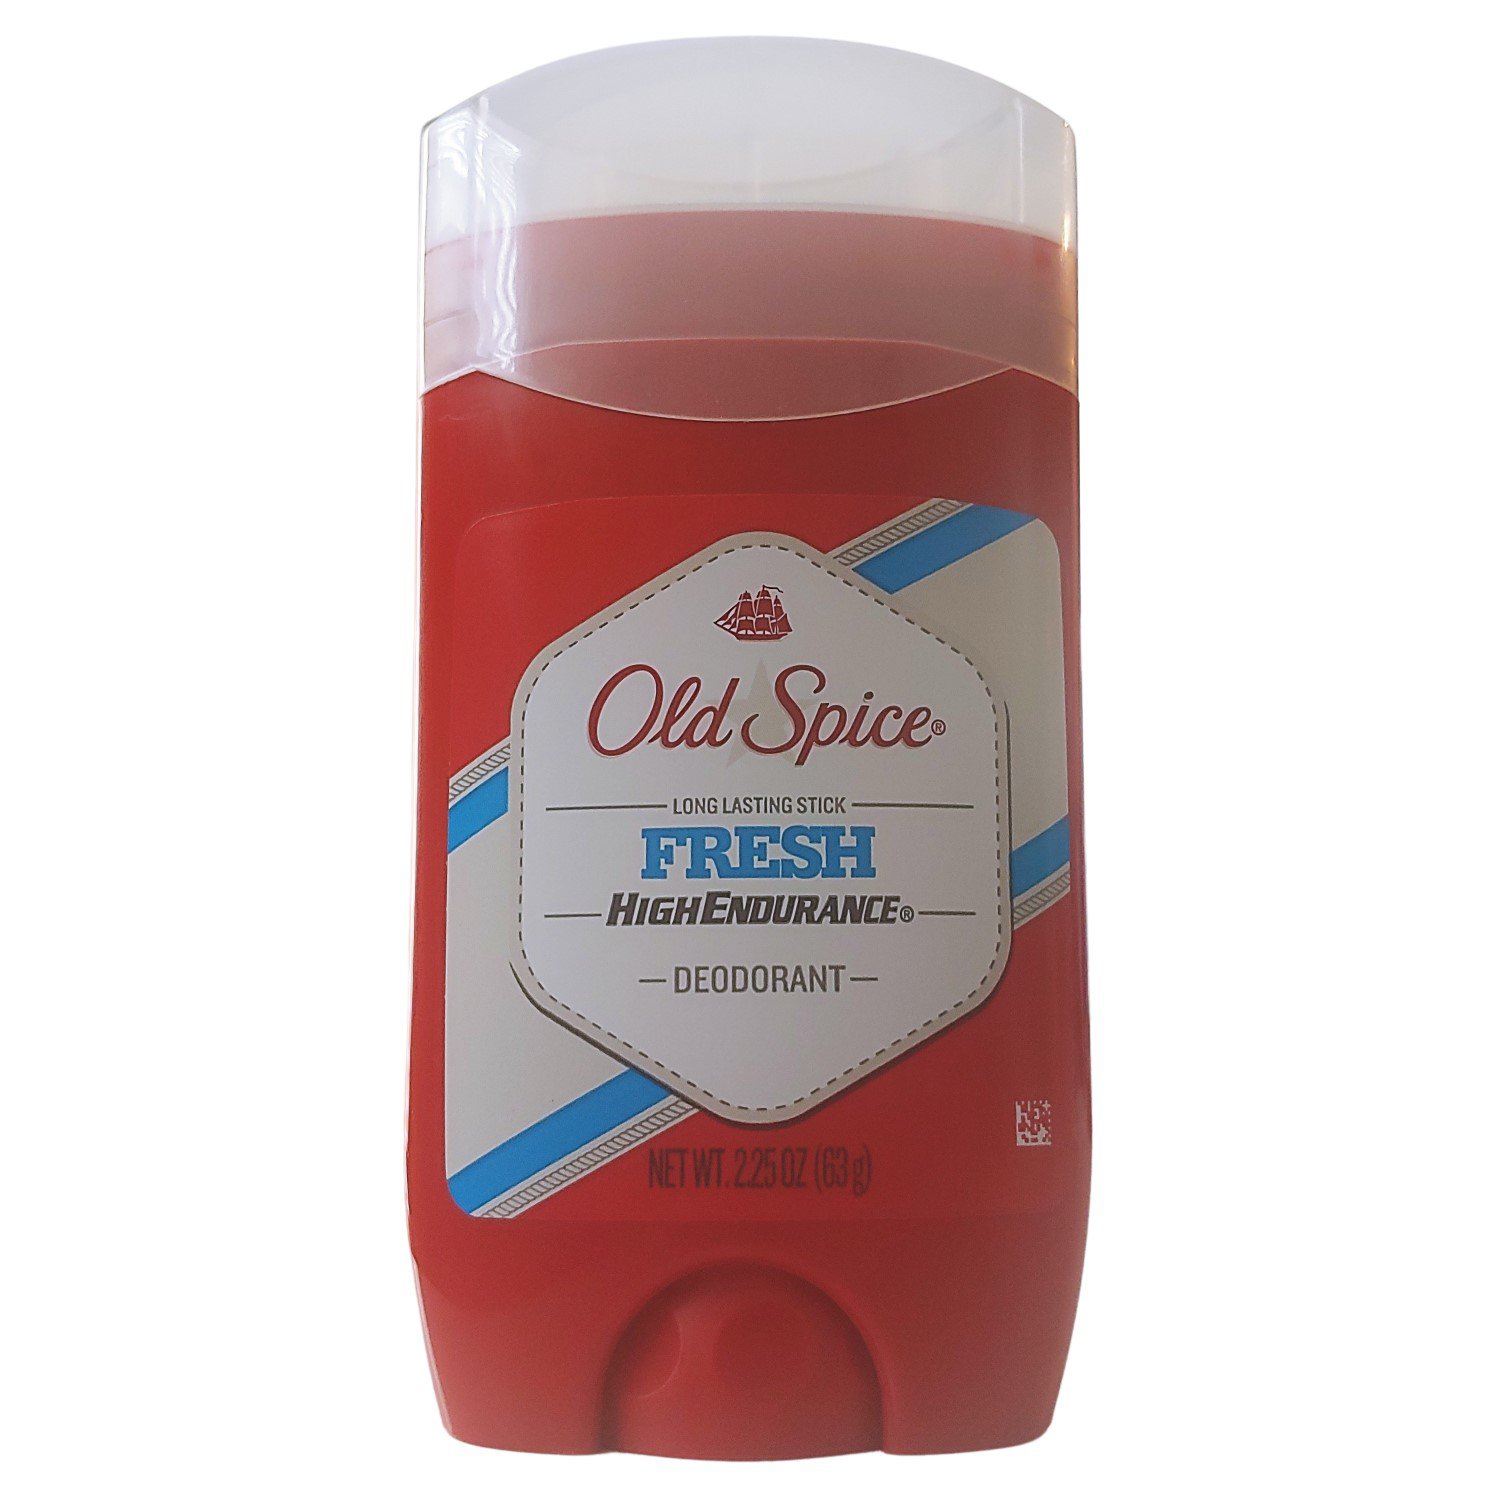 Old Spice High Endurance Deodorant, Fresh, 2.25 oz (63 g)